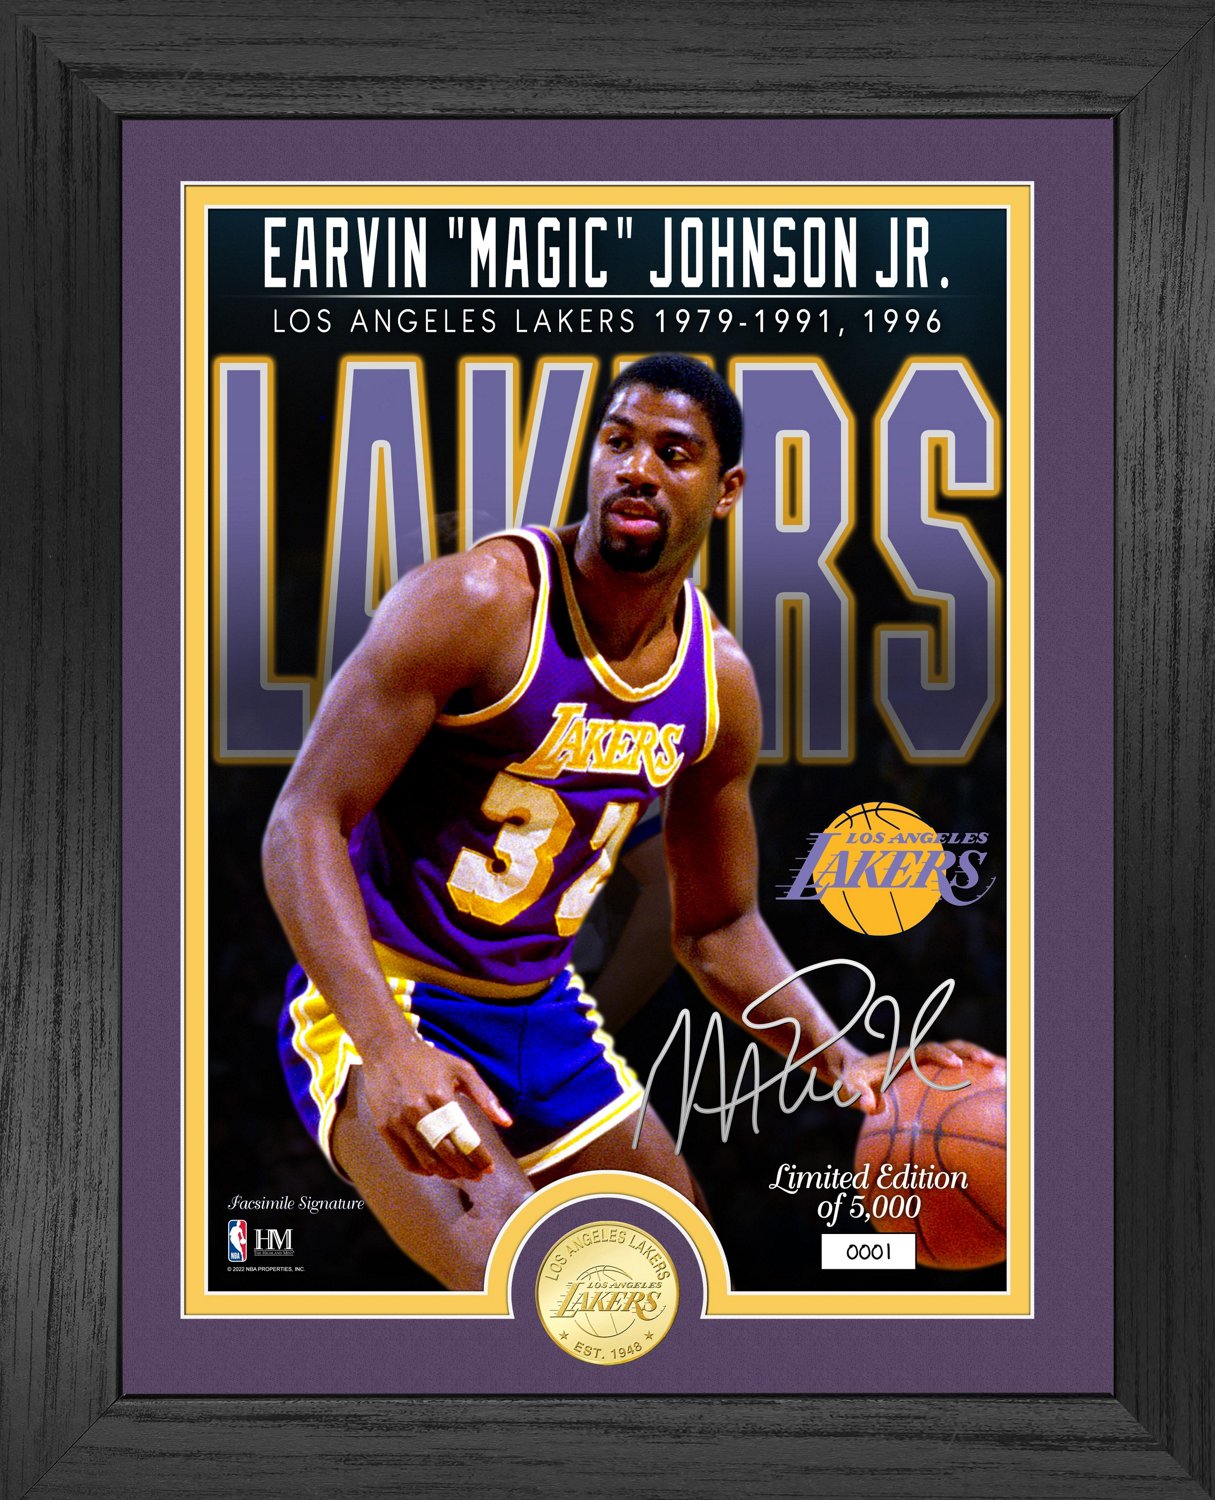  NBA Los Angeles Lakers Magic Johnson Swingman Jersey, Gold,  Small : Athletic Jerseys : Sports & Outdoors